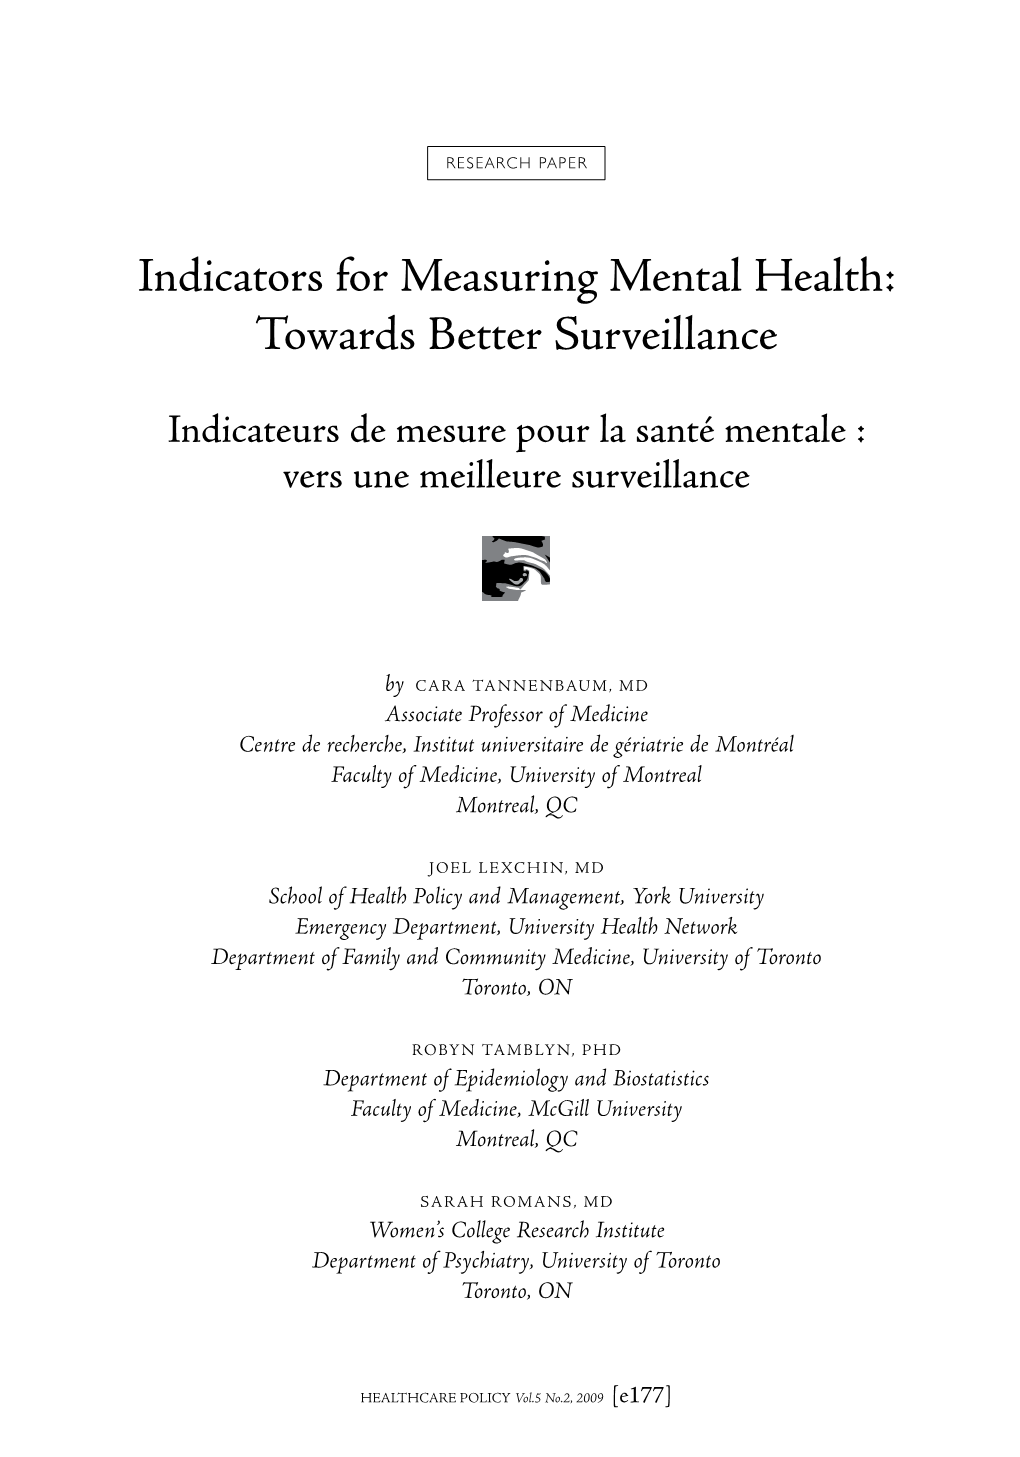 Indicators for Measuring Mental Health: Towards Better Surveillance